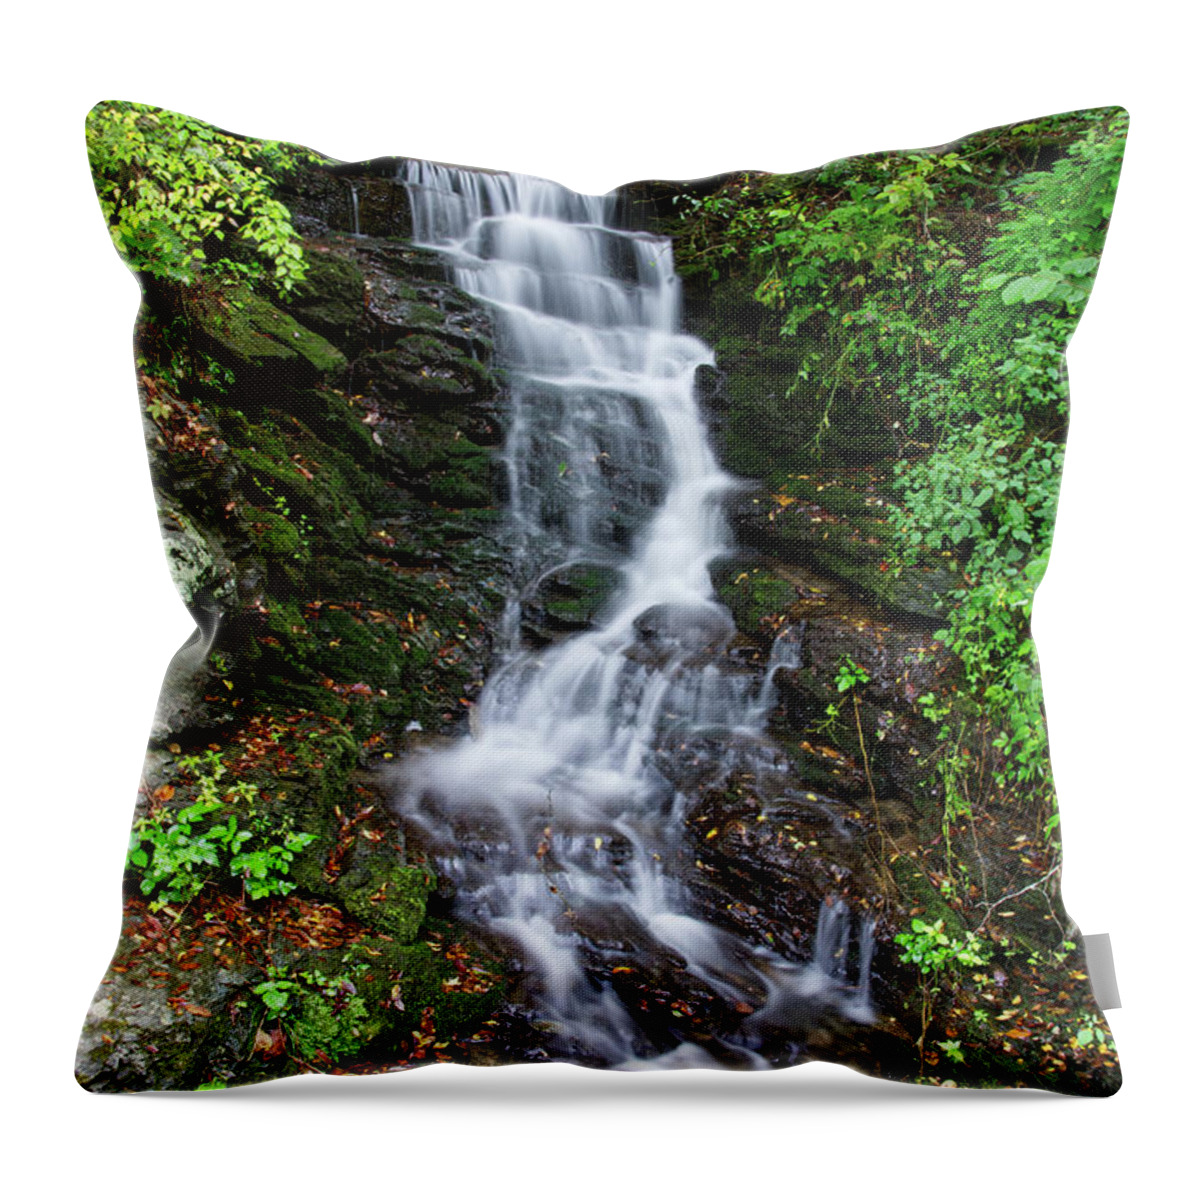 Roadside Throw Pillow featuring the digital art Roadside Waterfall 4 by Phil Perkins